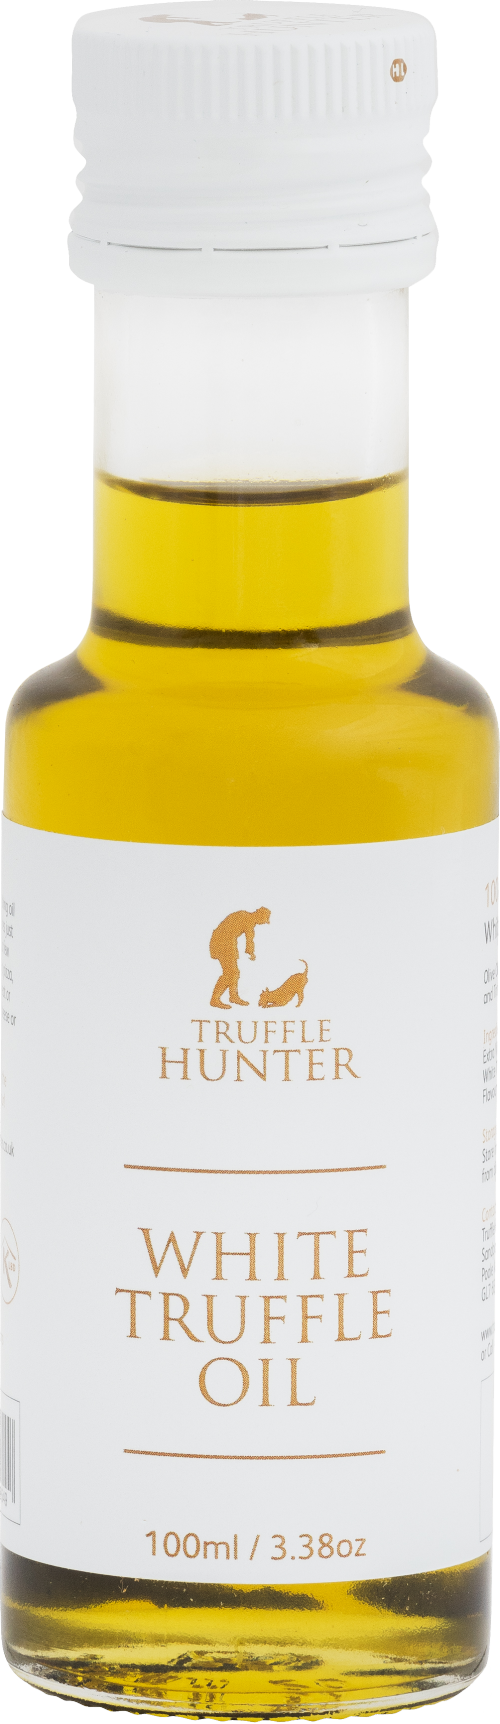 TRUFFLE HUNTER White Truffle Oil 100ml